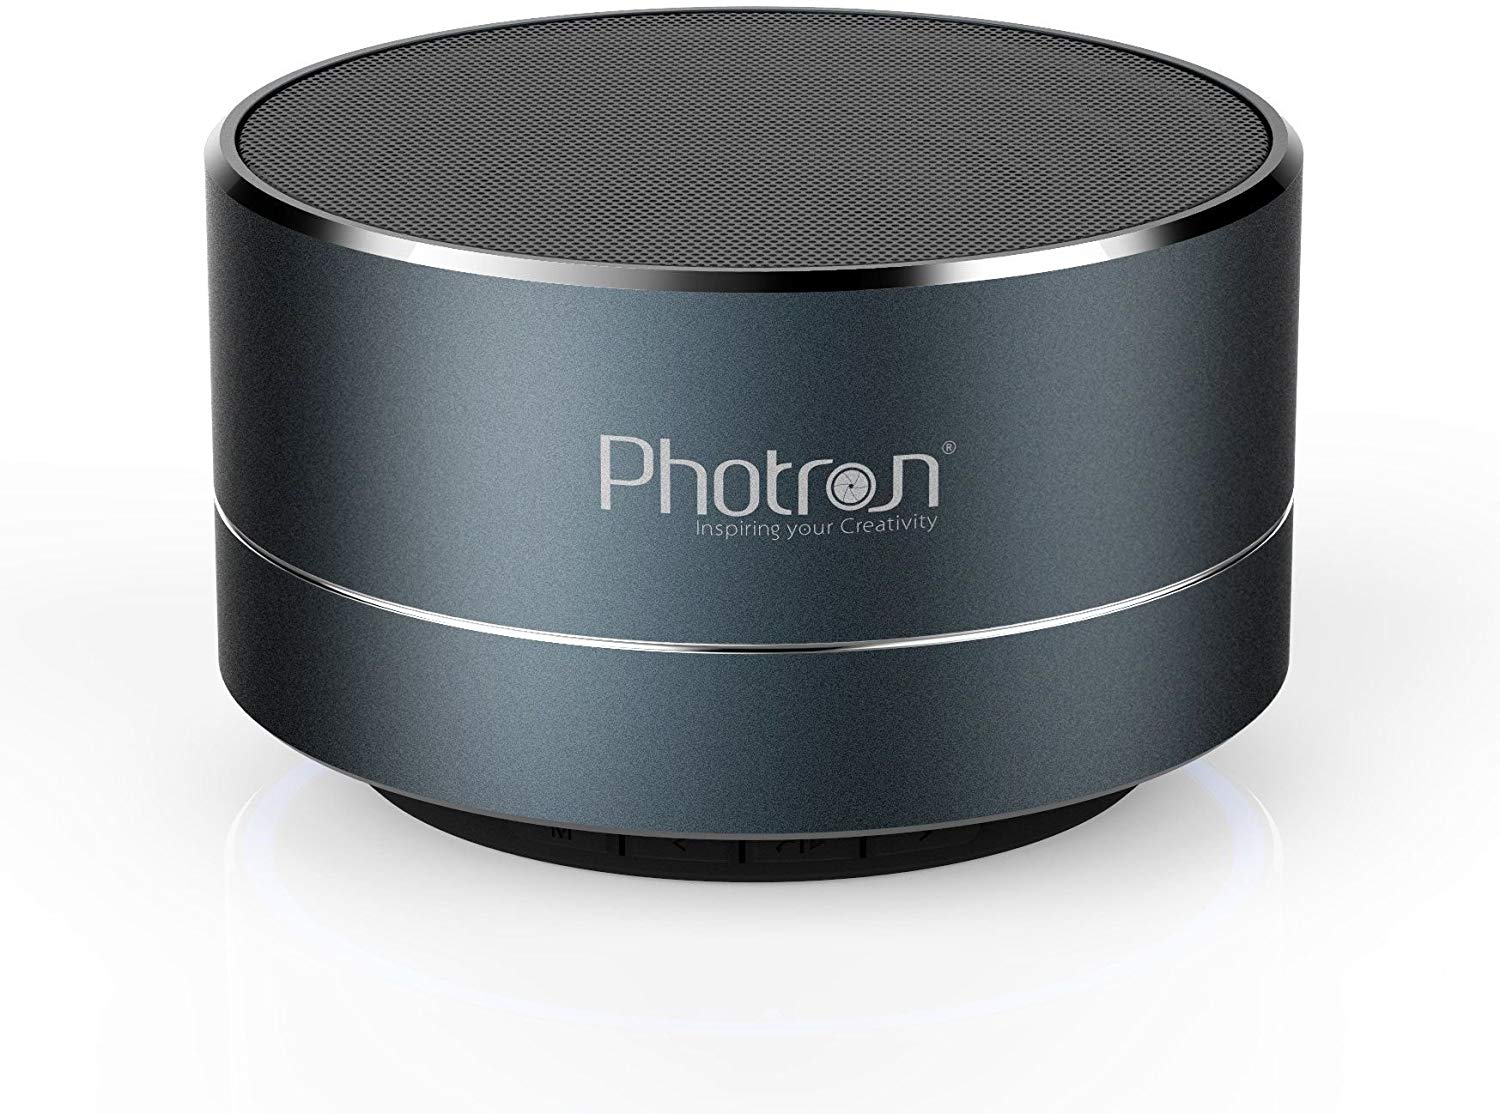 Photron P10 Wireless 3w Portable Bluetooth Speaker Photos Image